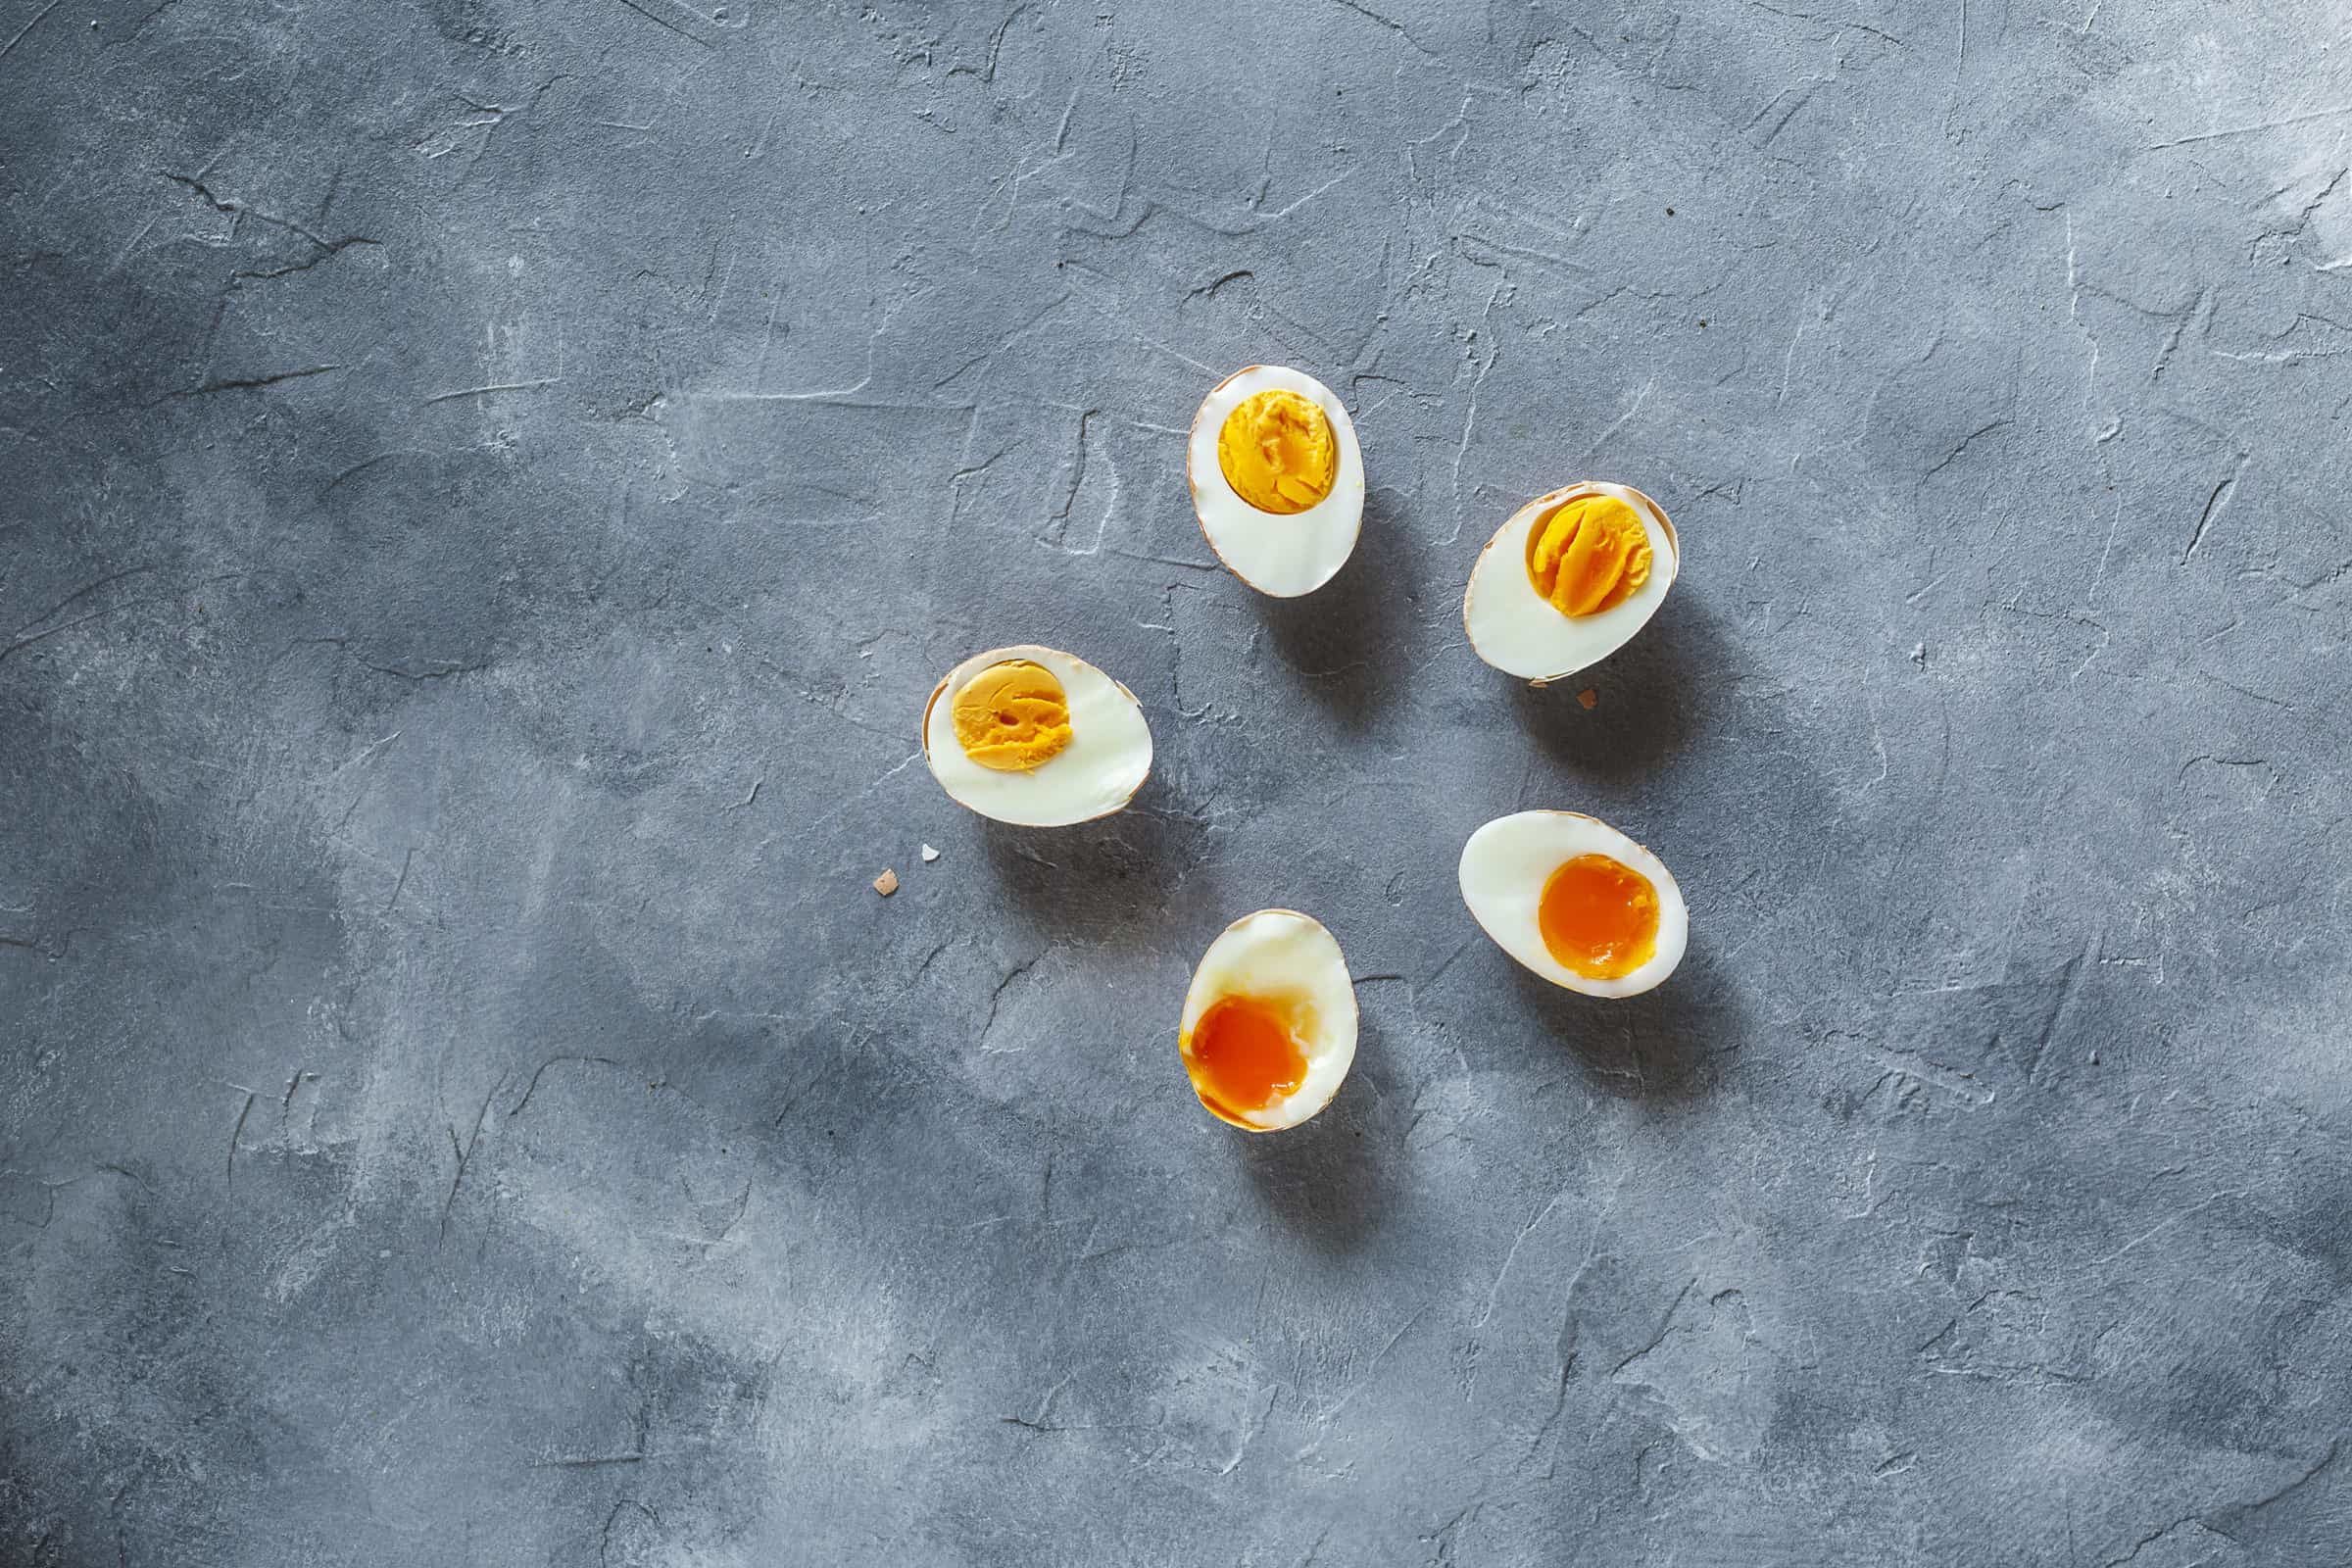 Halbierte, gekochte Eier im Kreis angeordnet – foto: Anna Gieseler